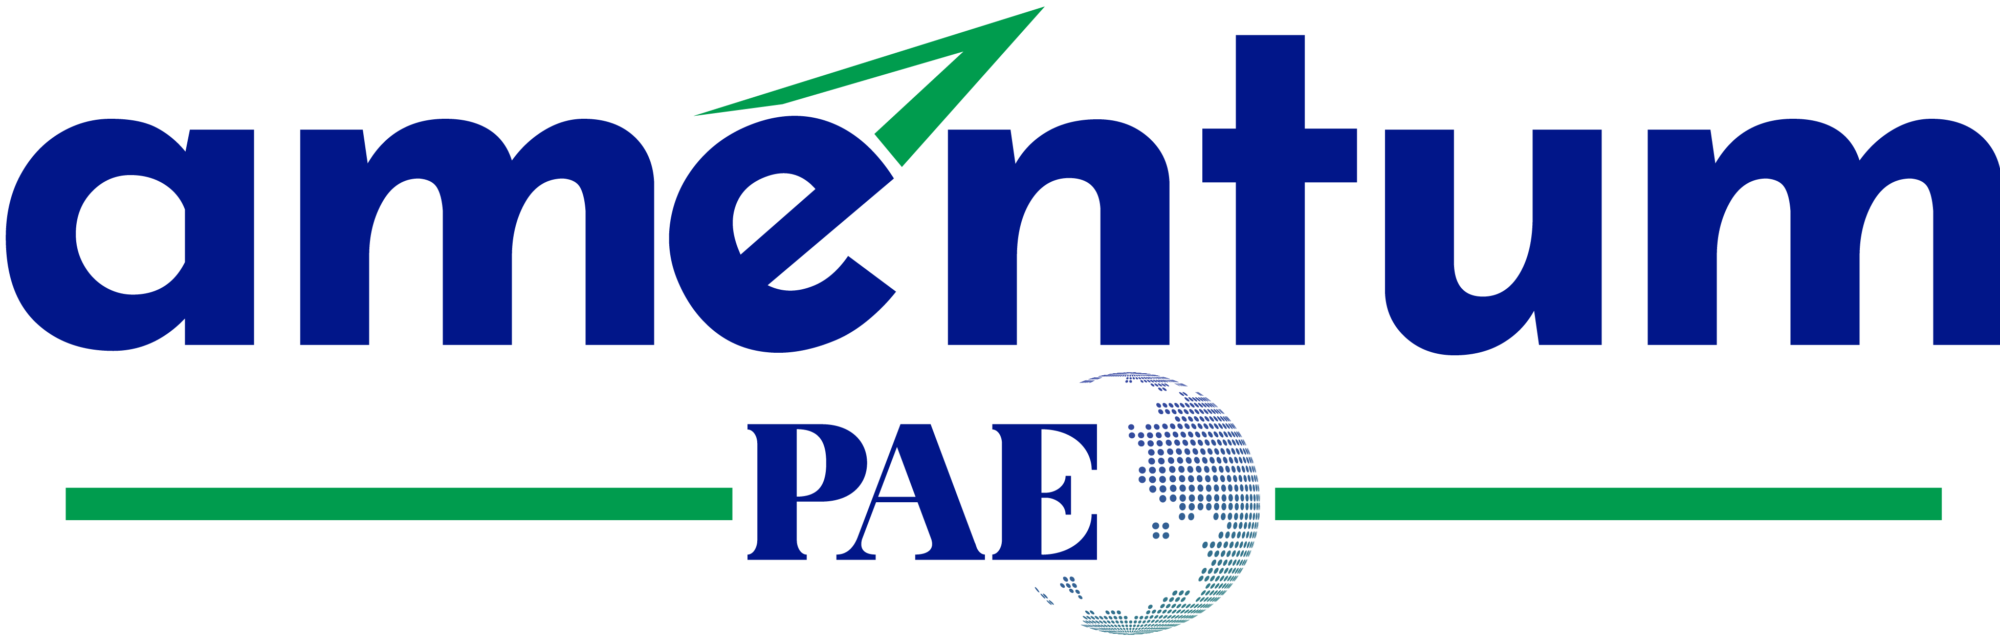 Amentum PAE Logo